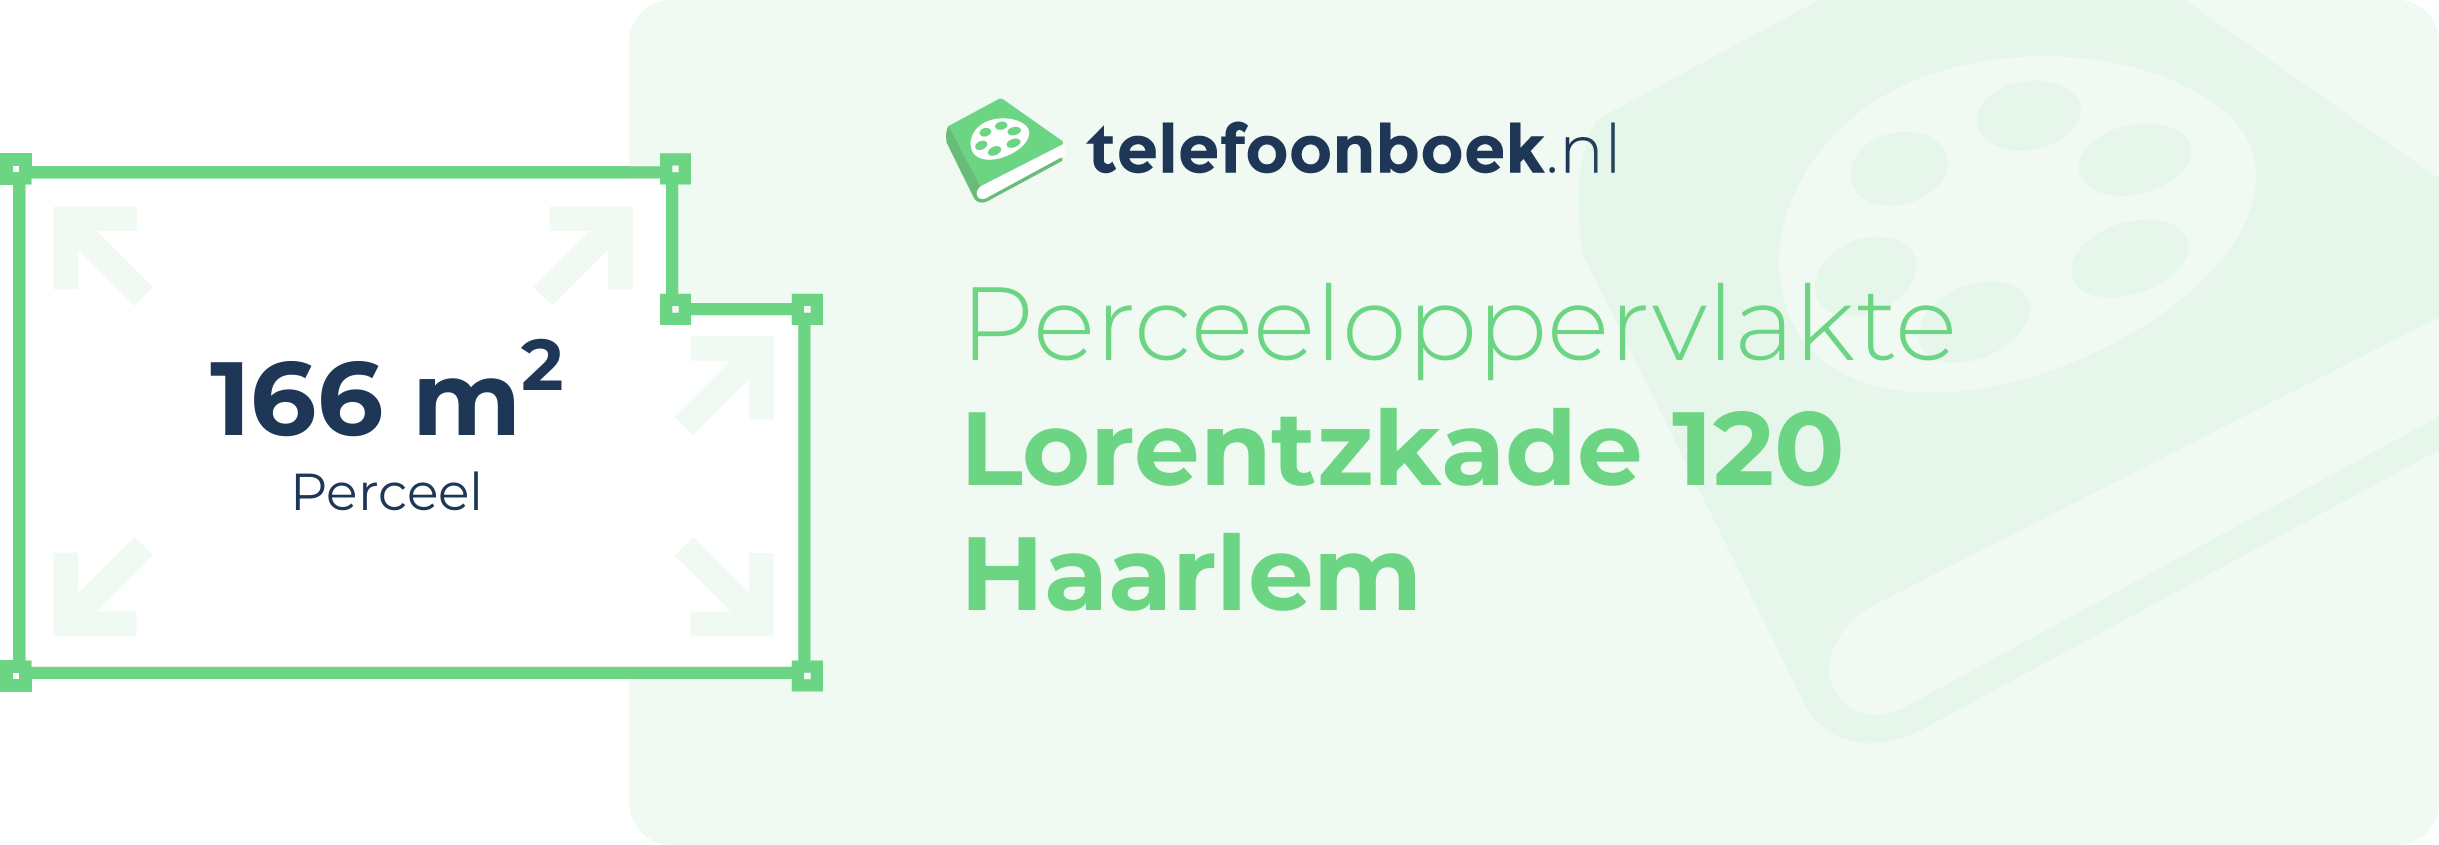 Perceeloppervlakte Lorentzkade 120 Haarlem